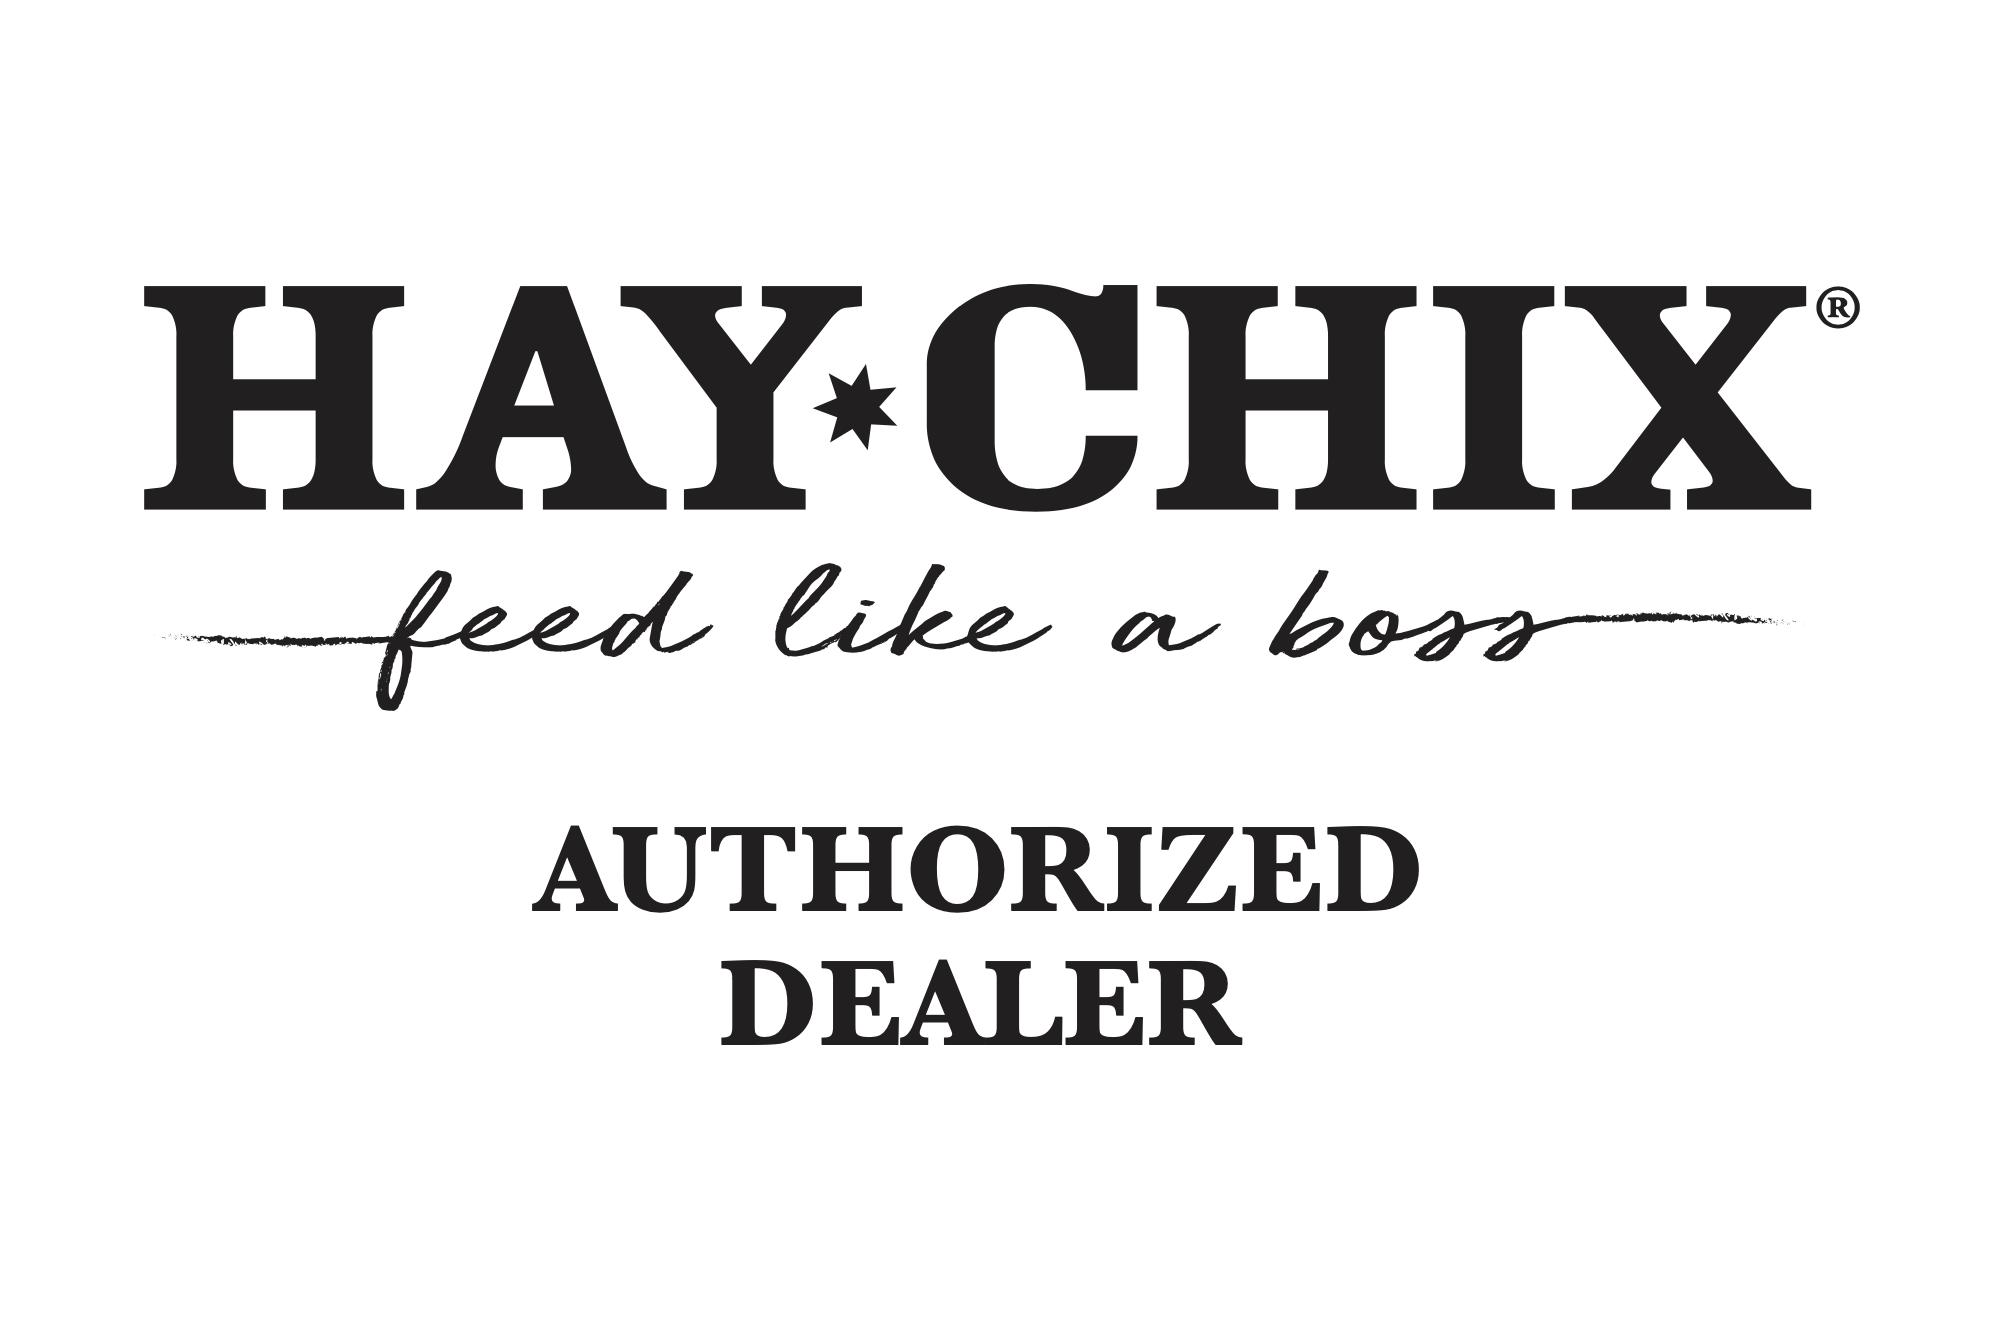 HayChix_Dealer Sign